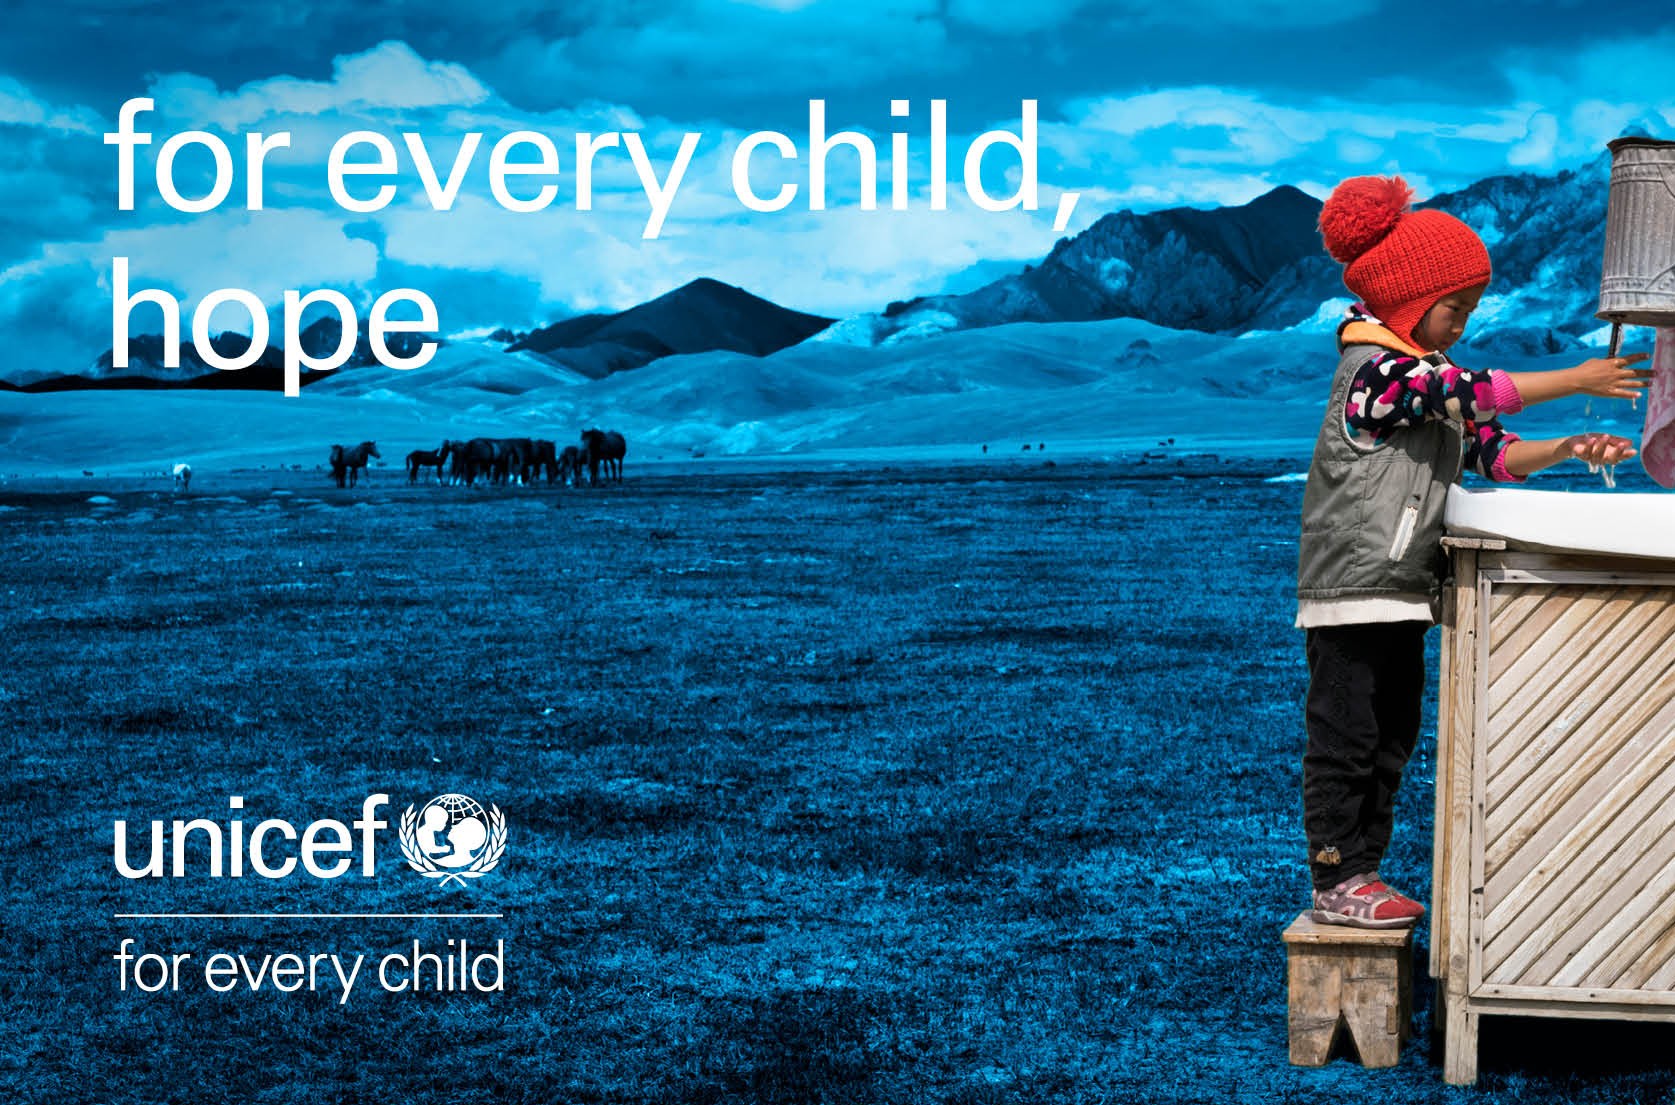 Creative Agency Marcel Gives UNICEF Fresh Brand Identity